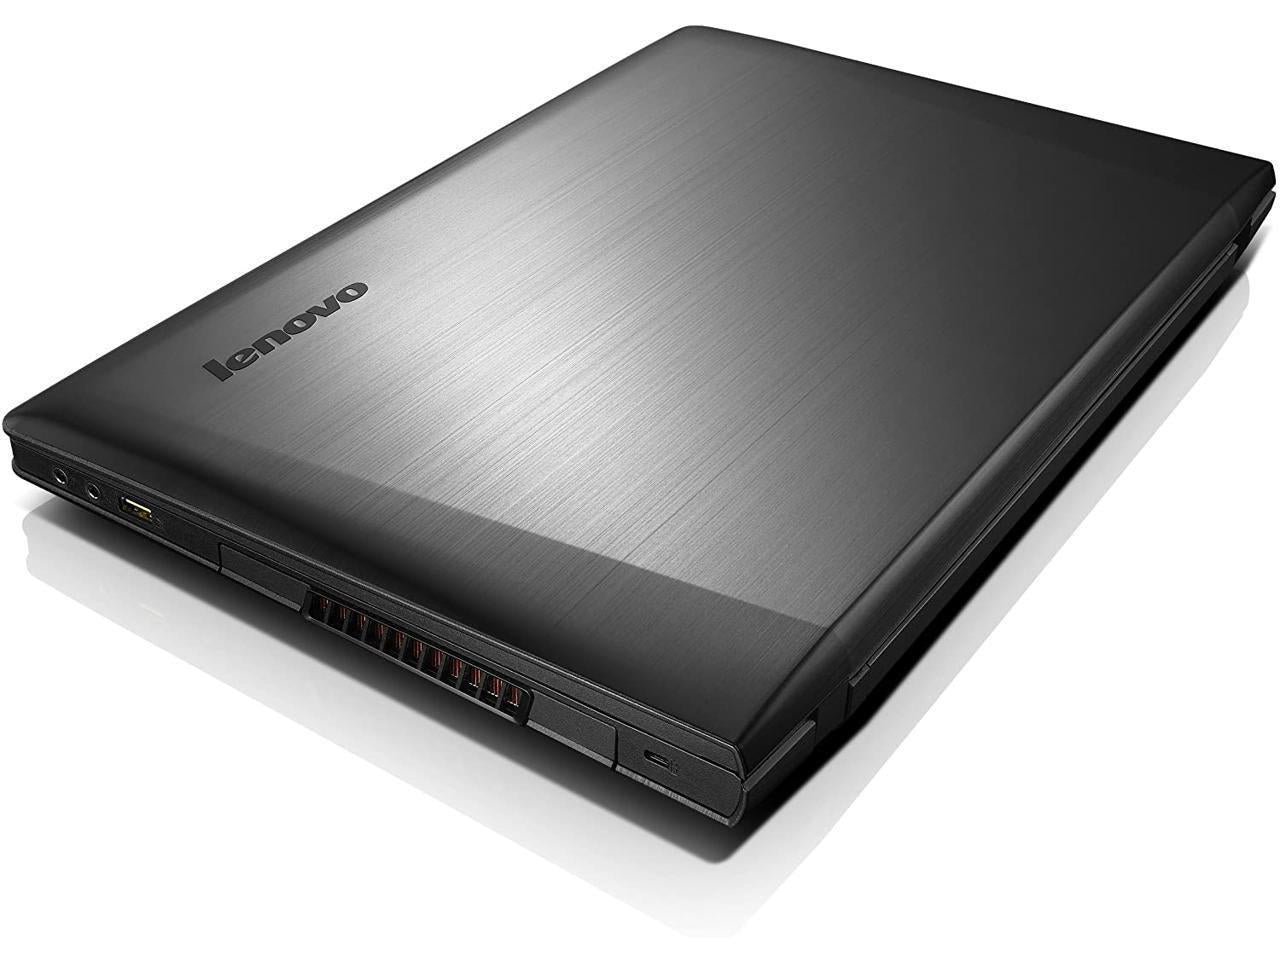 Lenovo Ideapad Y510P 15.6" Fhd Gaming Laptop ( Intel Core I7-4700M 2.4Ghz, 16Gb Ram, 1Tb Ssd, Dual